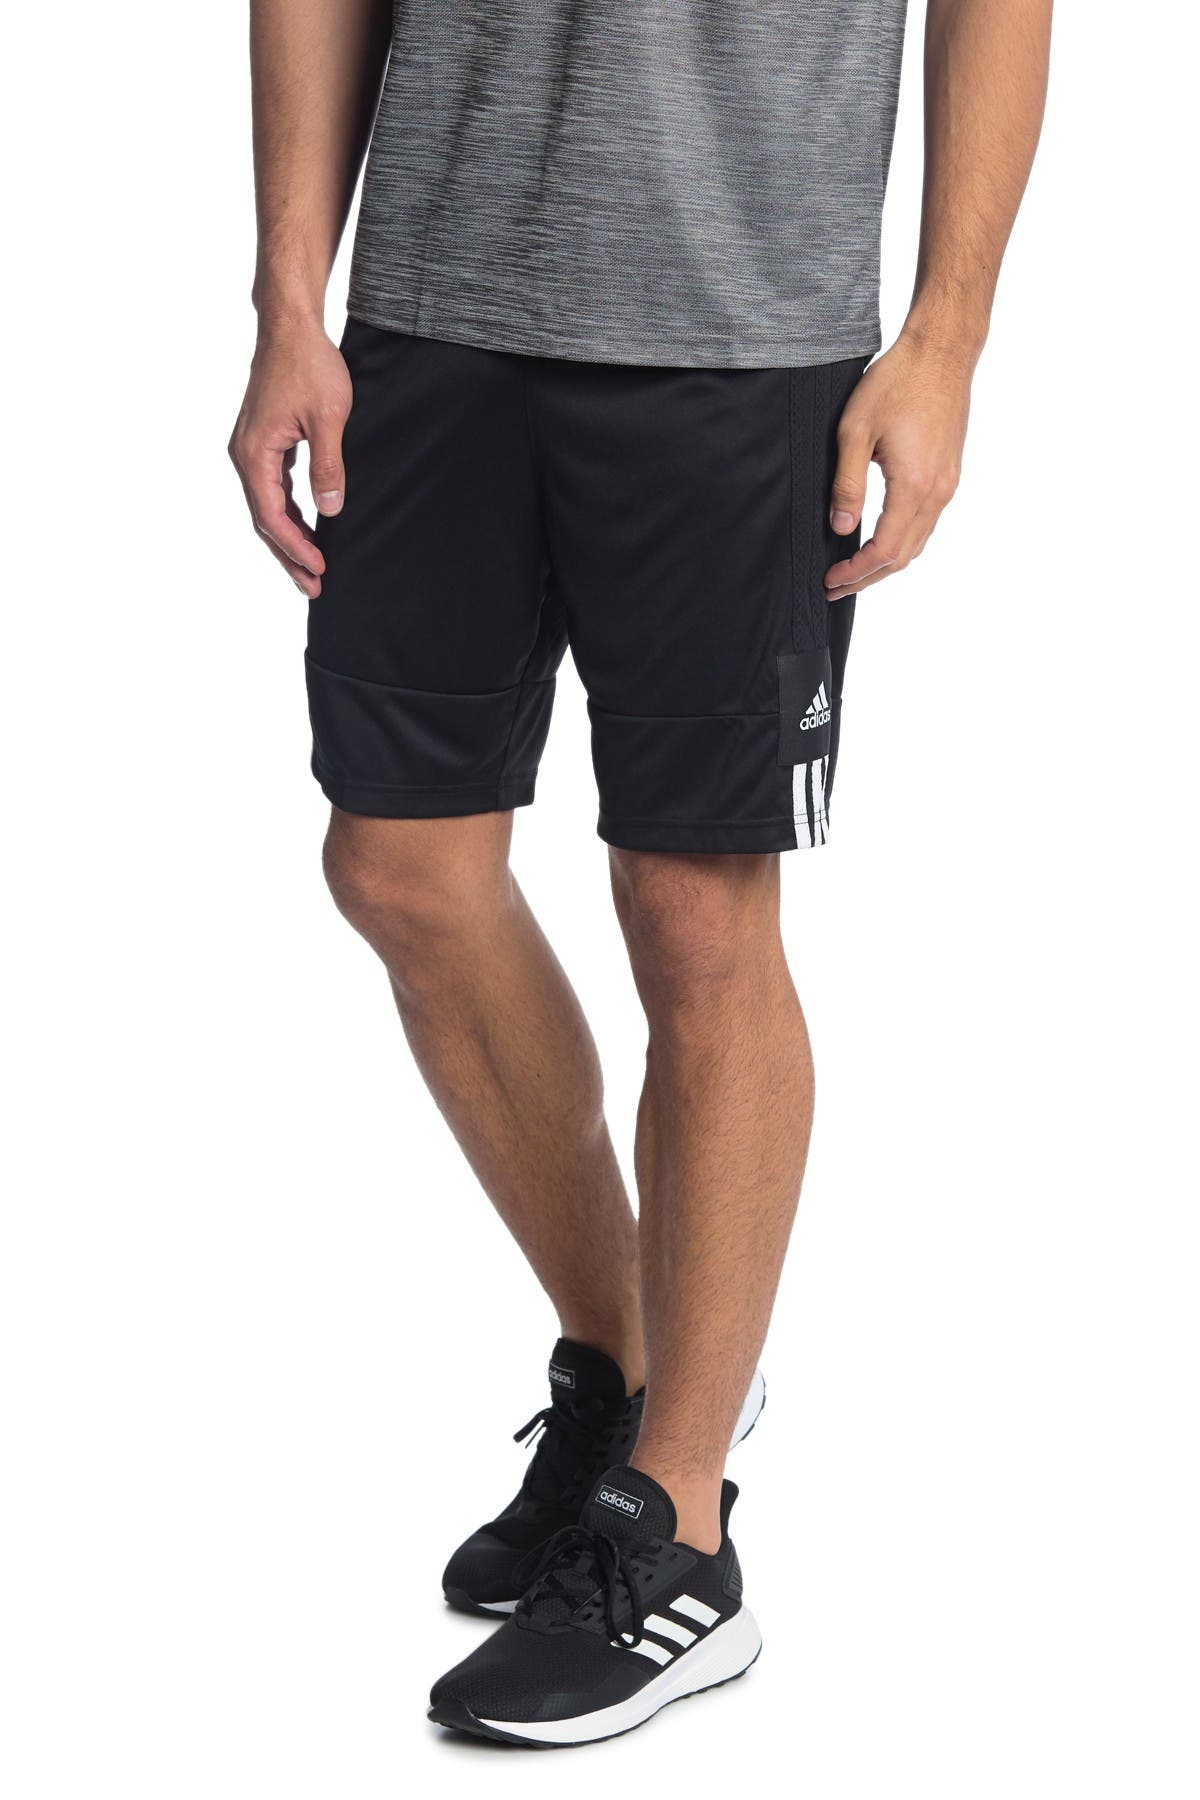 adidas 3g speed shorts